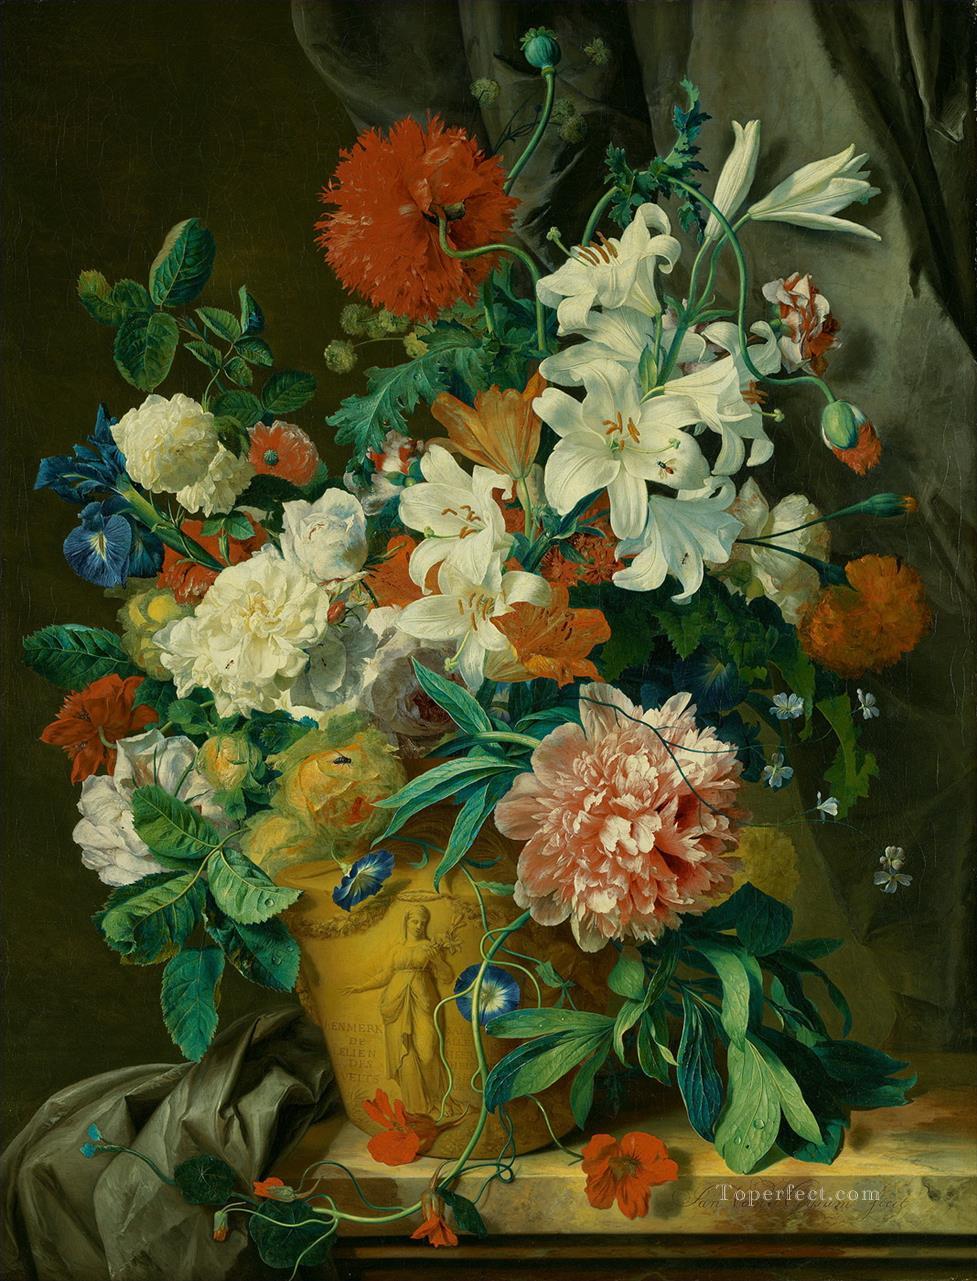 Stilleven はポットの中でブルーメンの花に出会った Jan van Huysum油絵